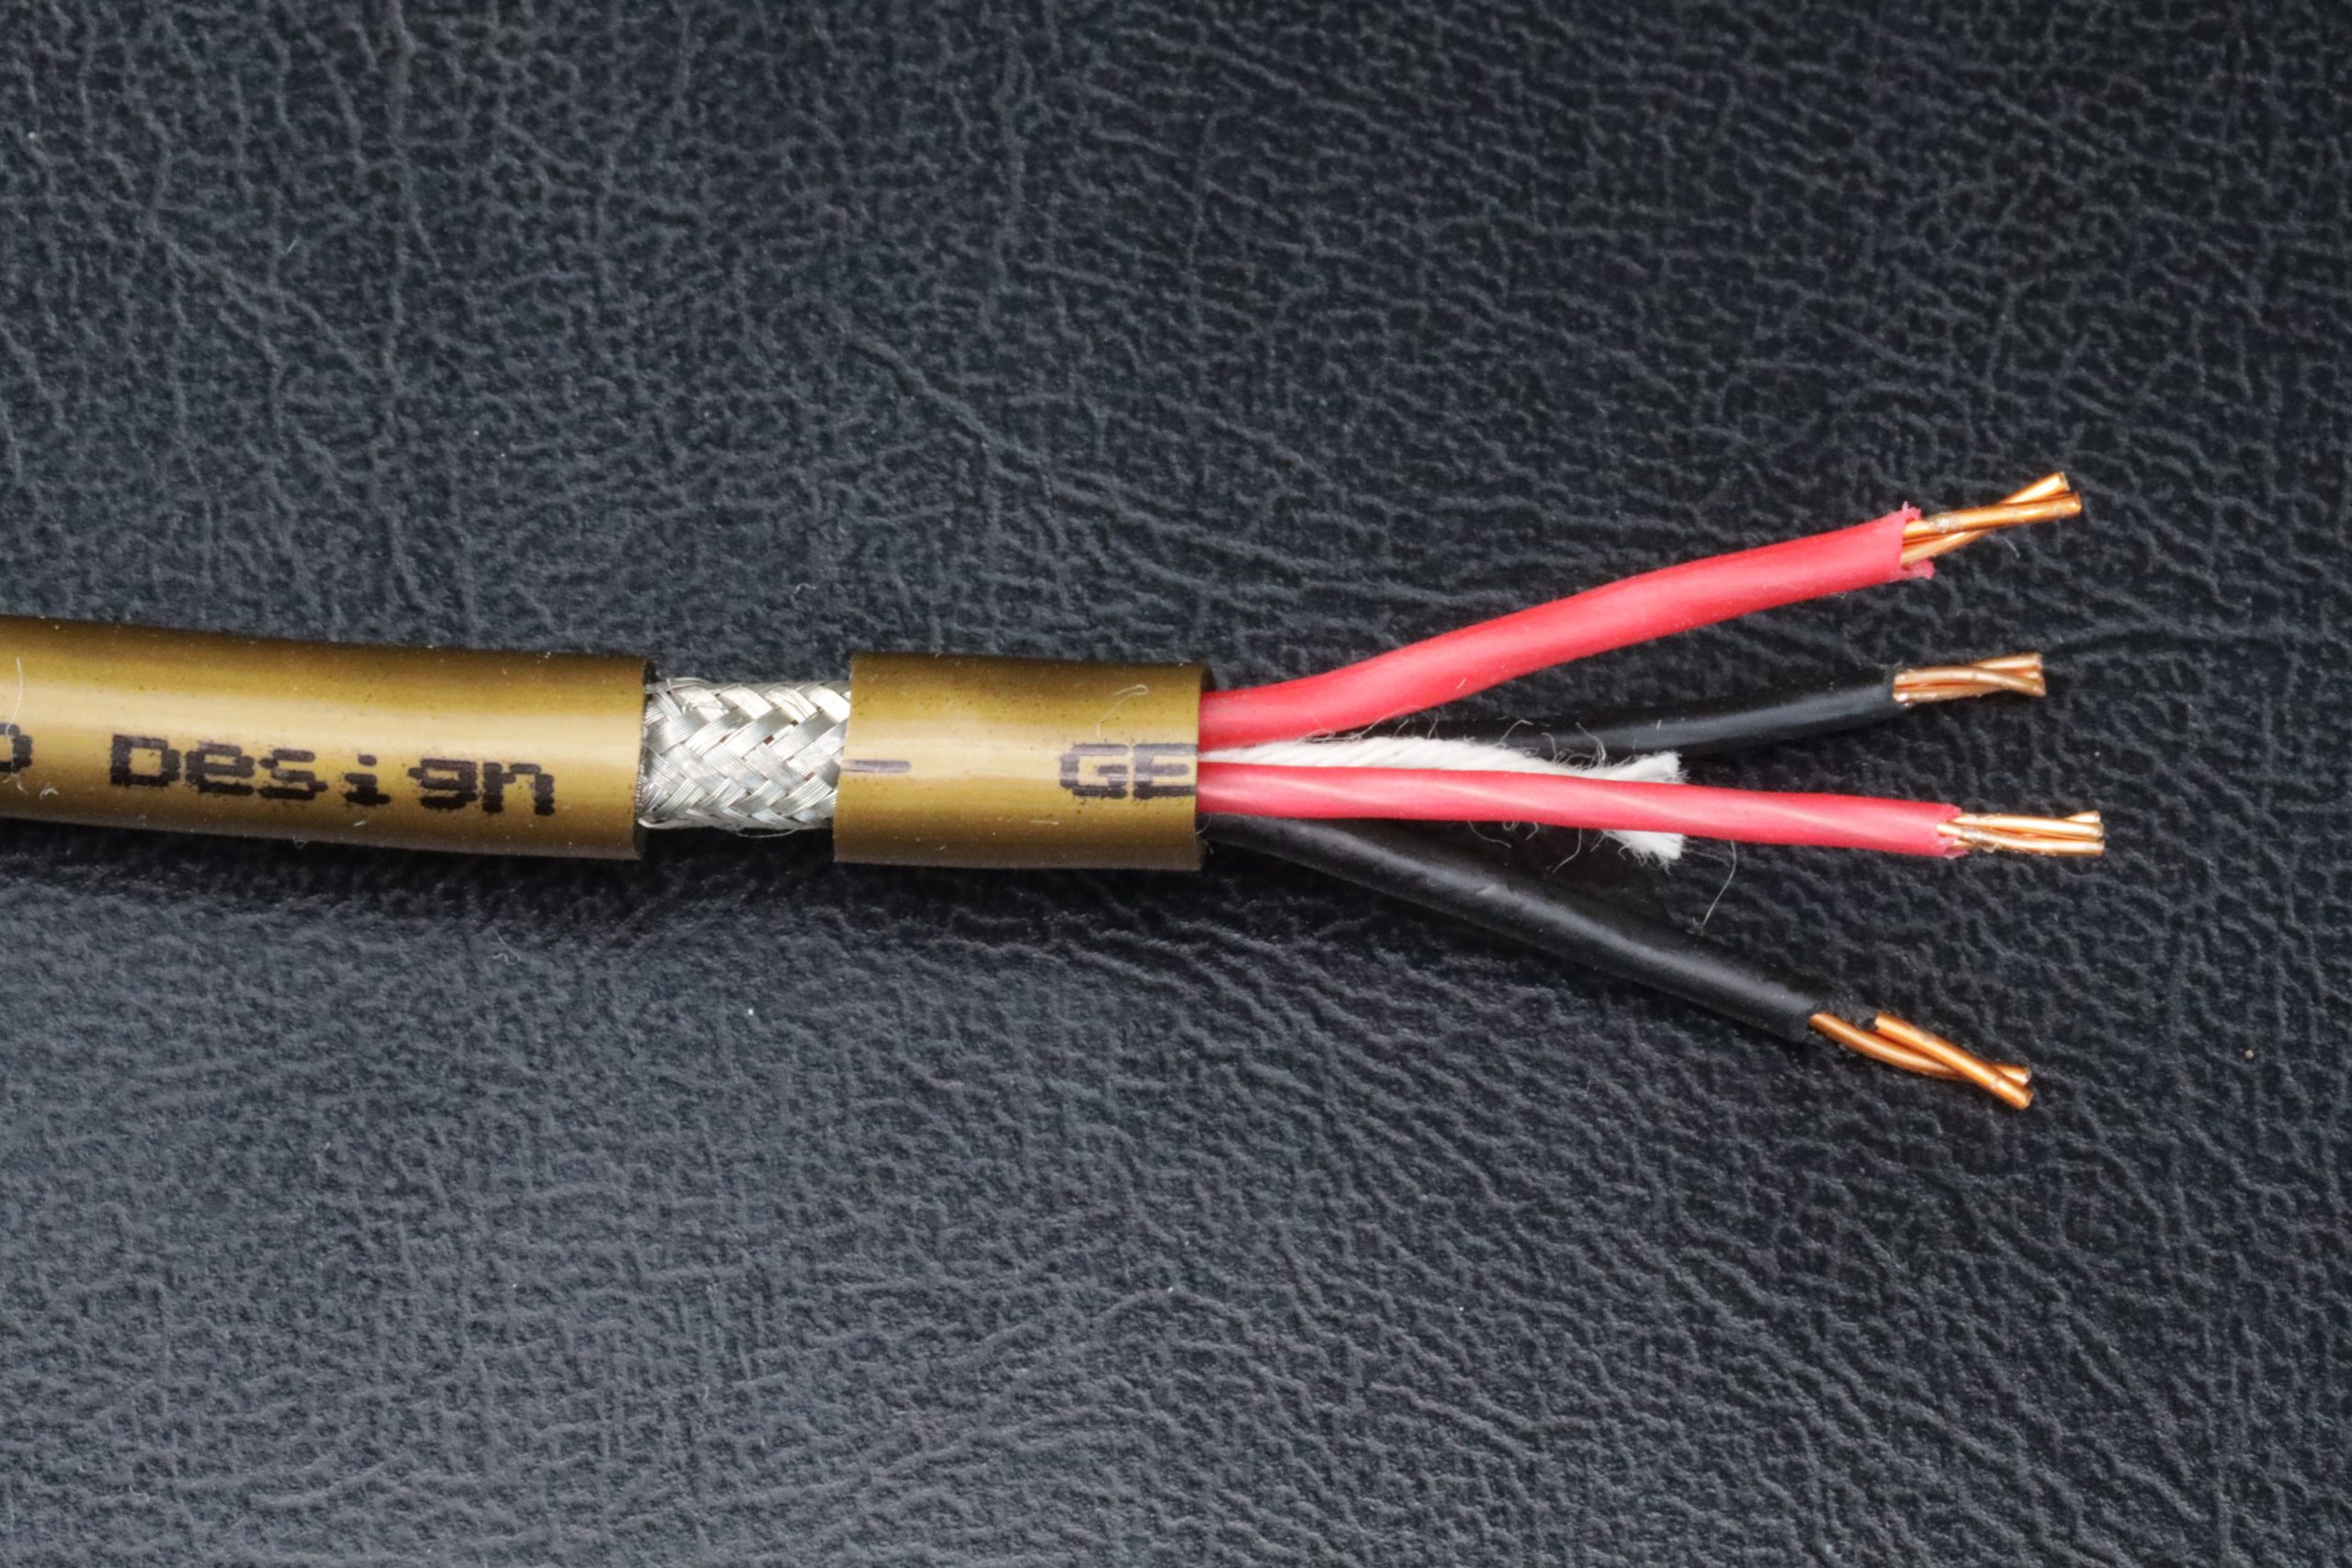 Copper Litz Phono Cable